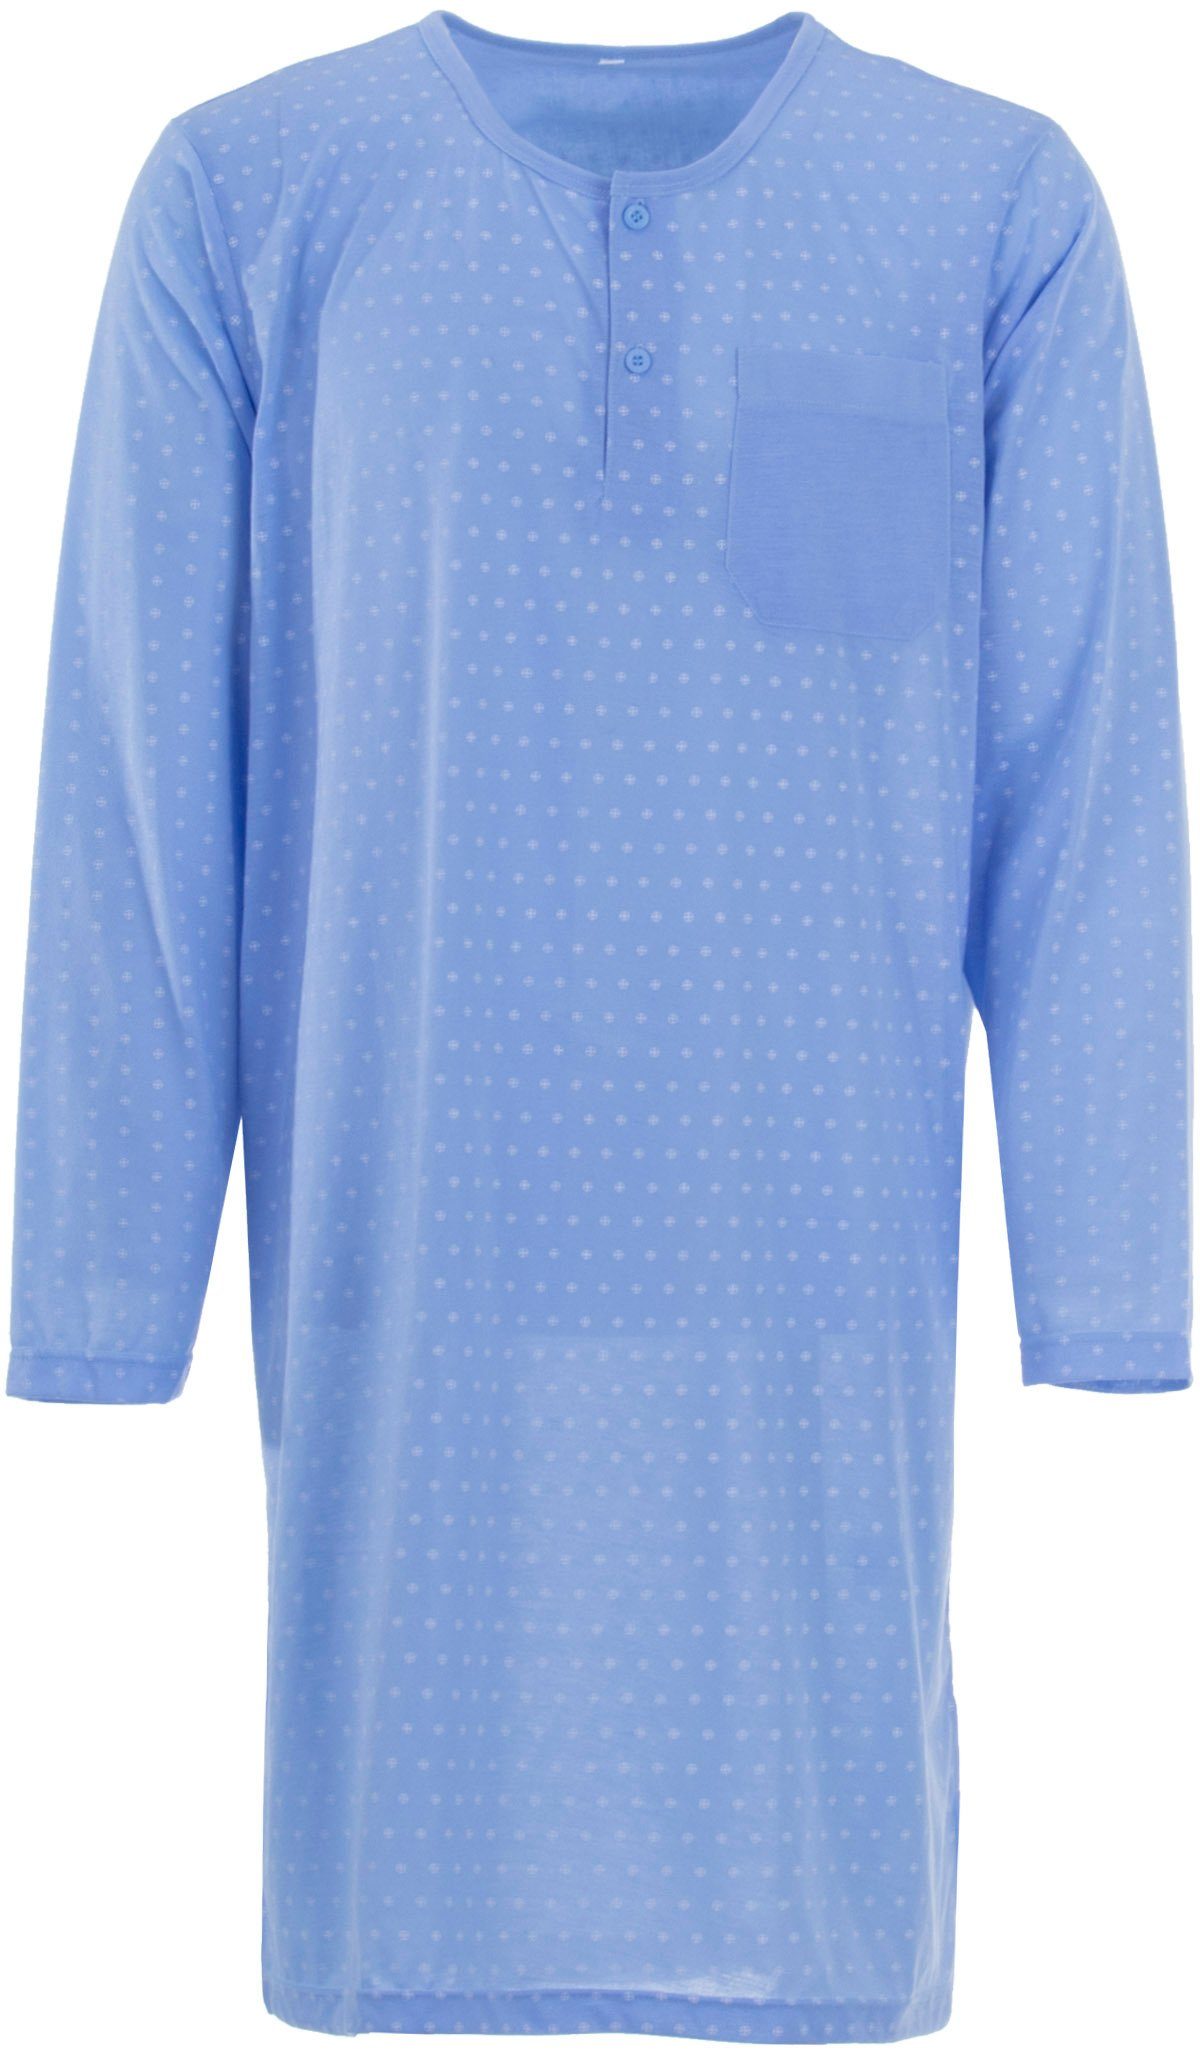 Terre Nachthemd blau Langarm Ball - Henry Nachthemd